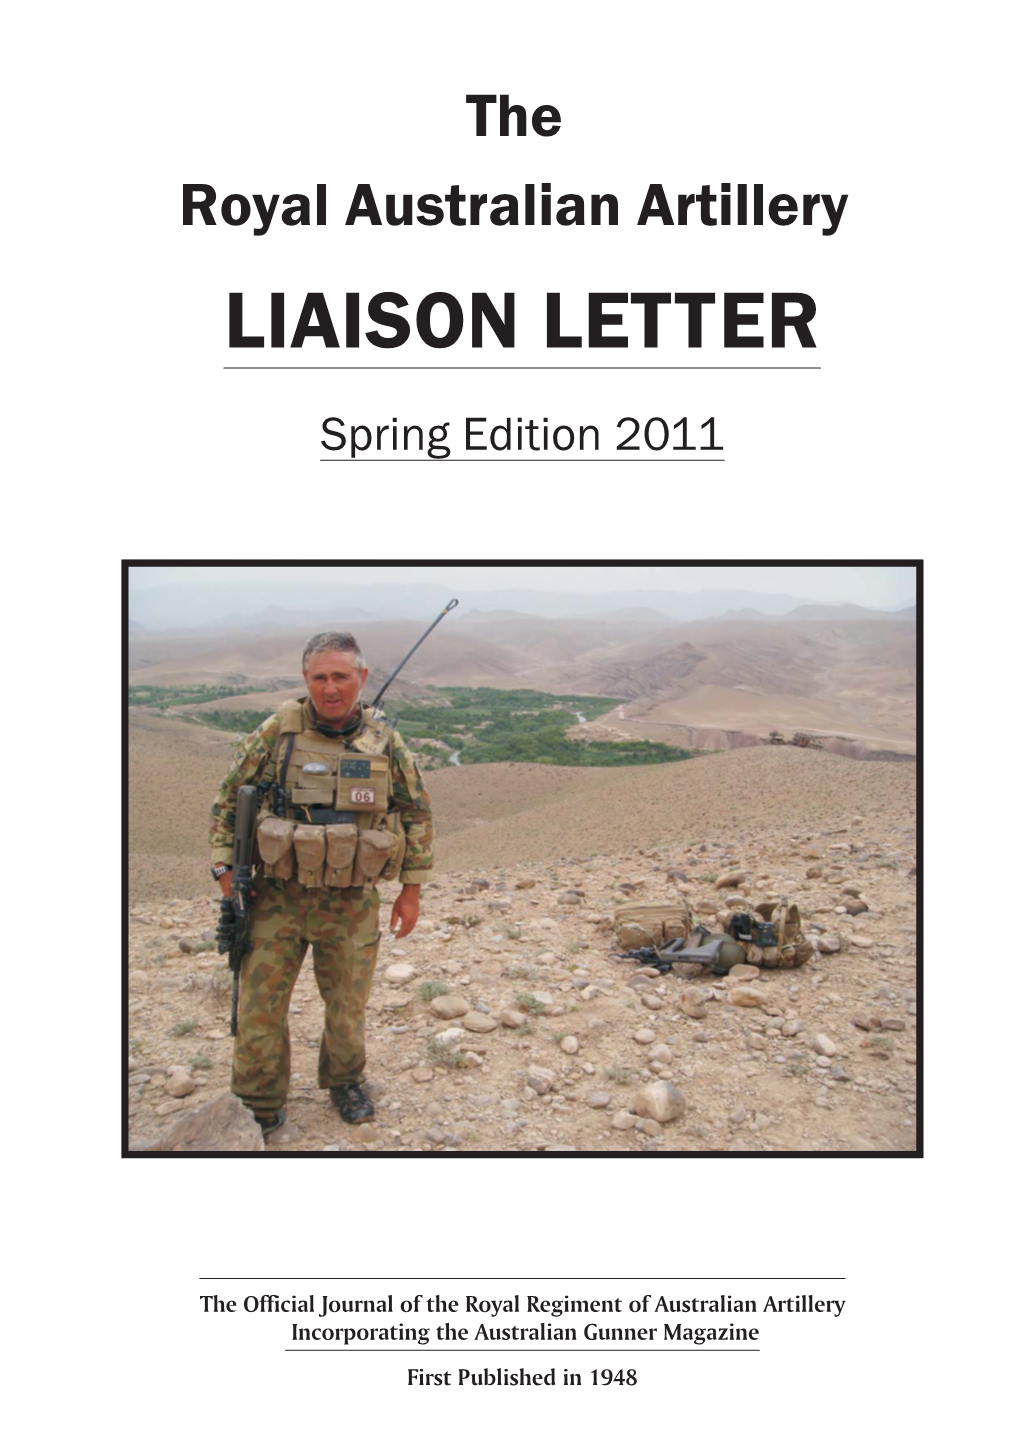 RAA Liaison Letter Spring 2011